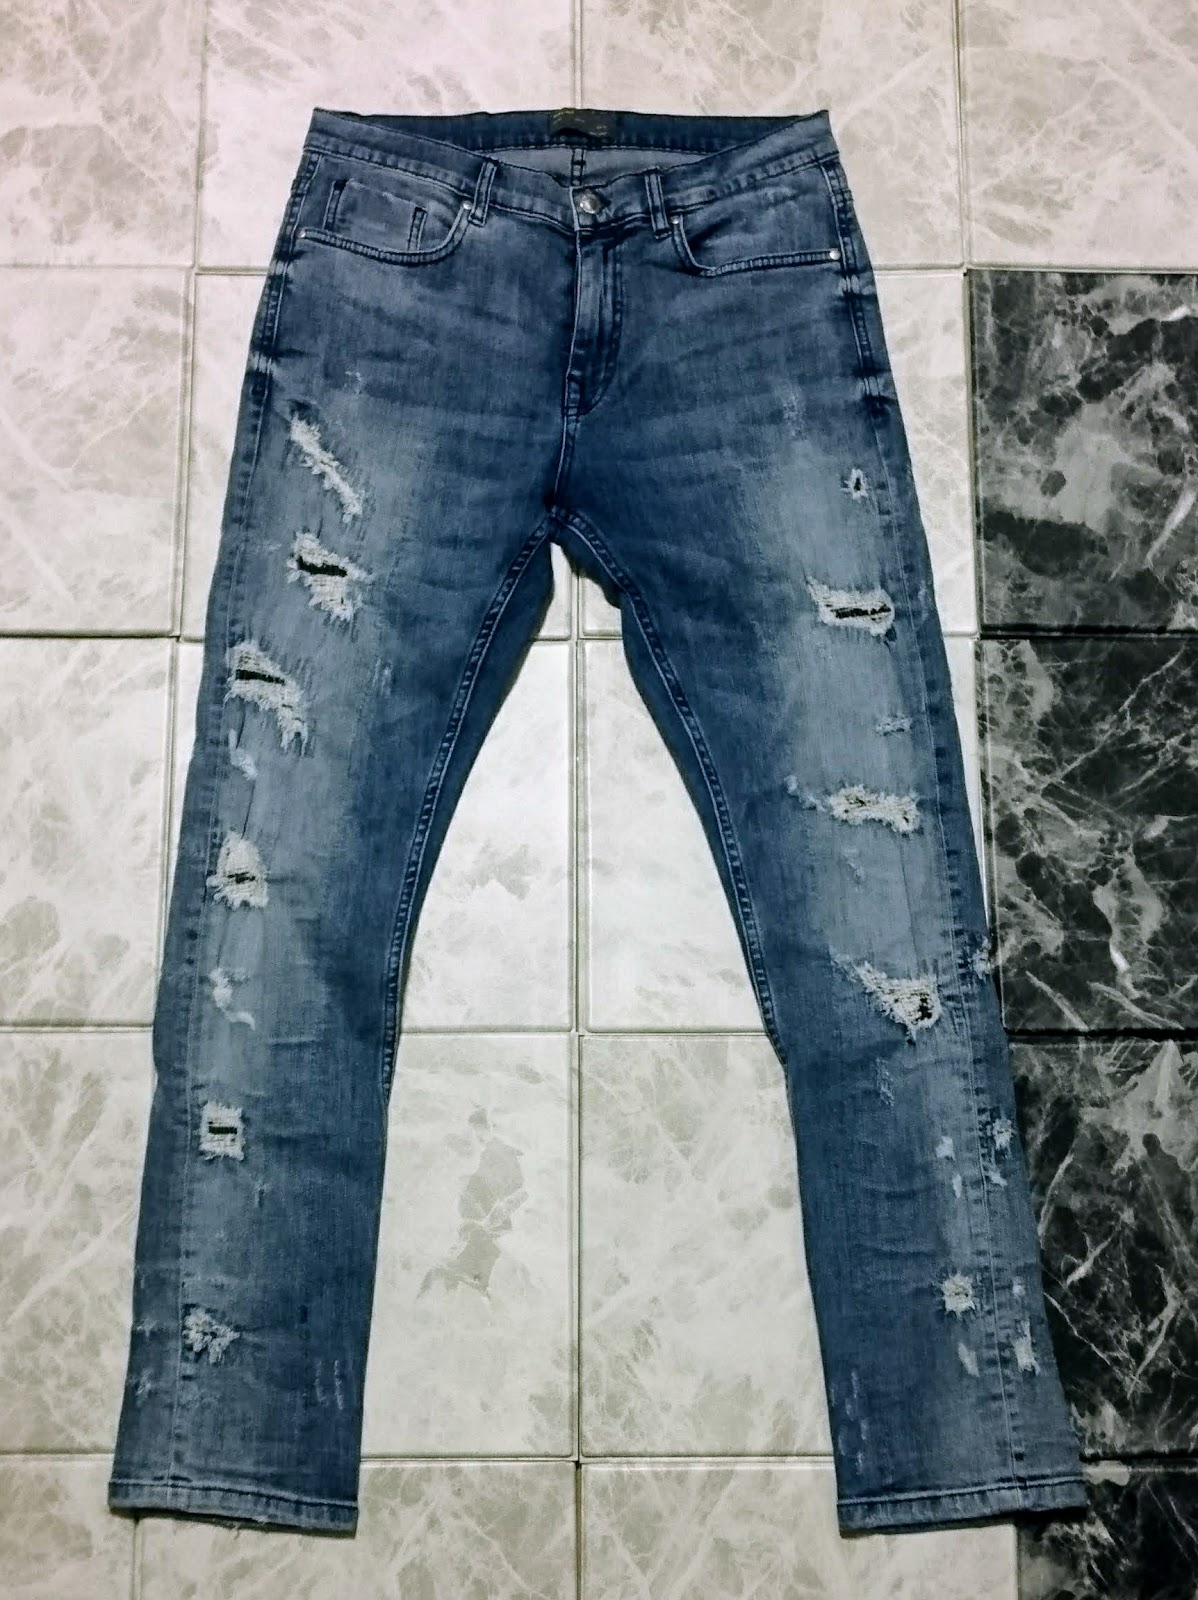 Zara Man スキニーデニム その１ のコーディネート リペア加工のジーンズの 着こなし方 を考える ザラ 商品レビュー